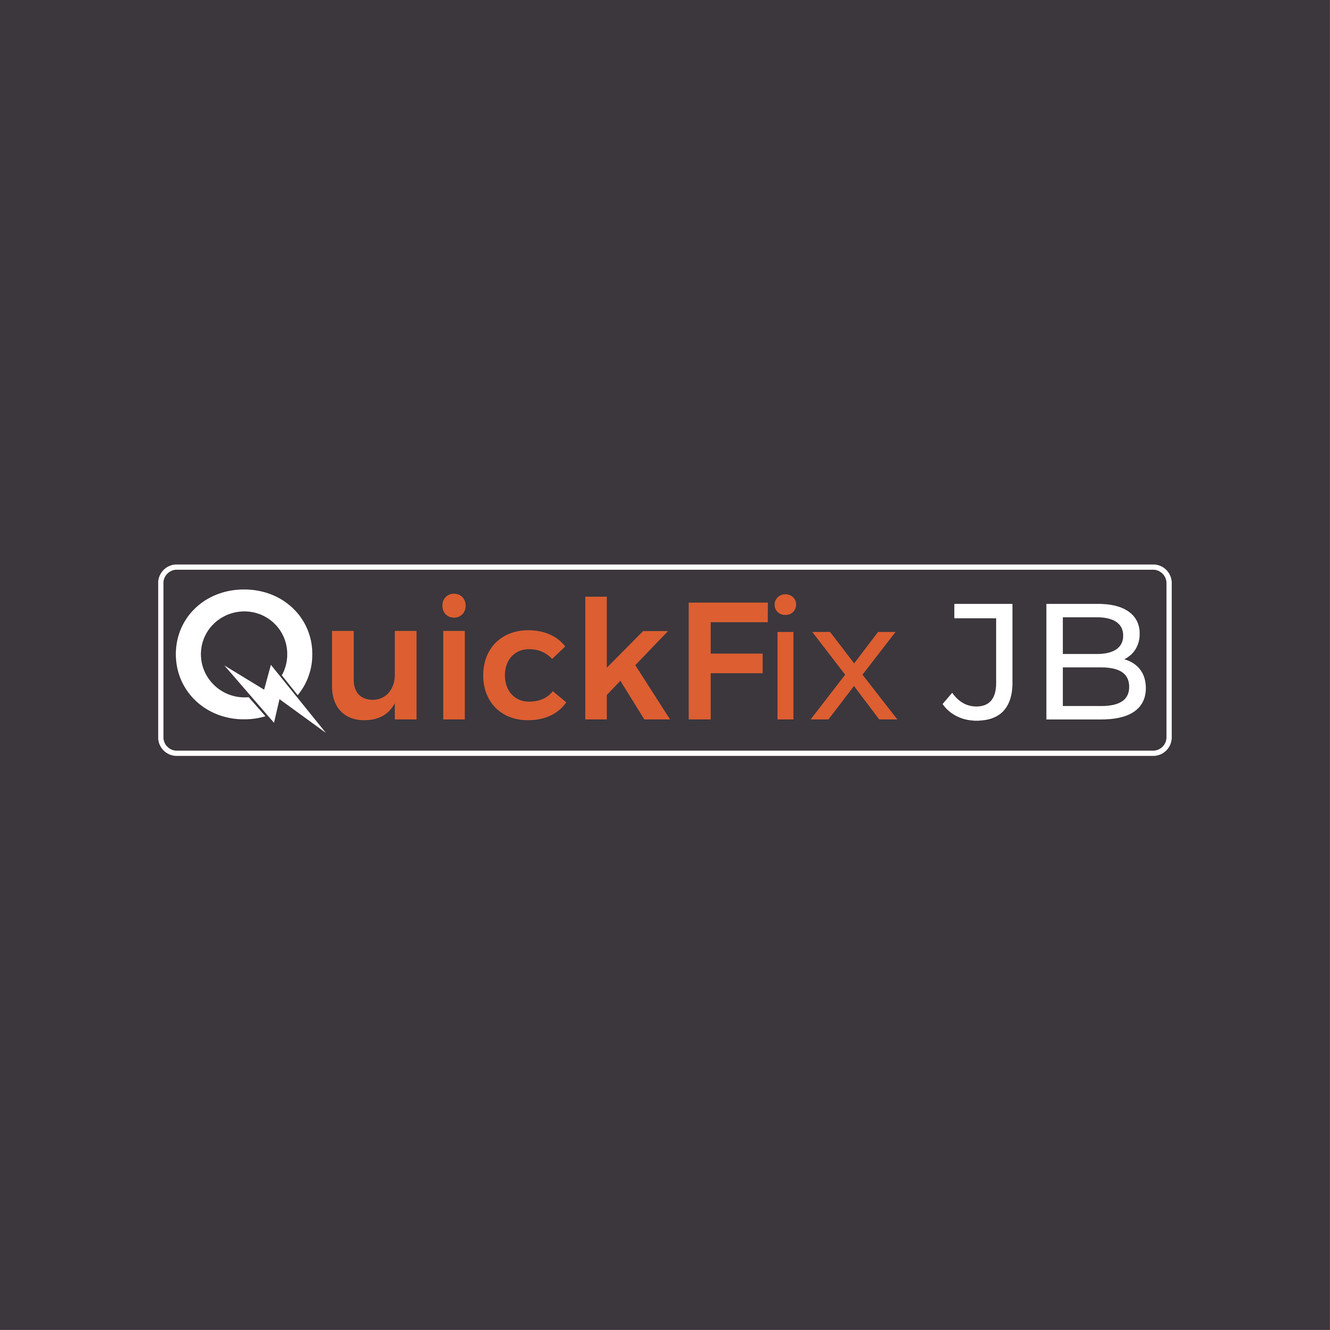 www.quickfixjb.co.uk